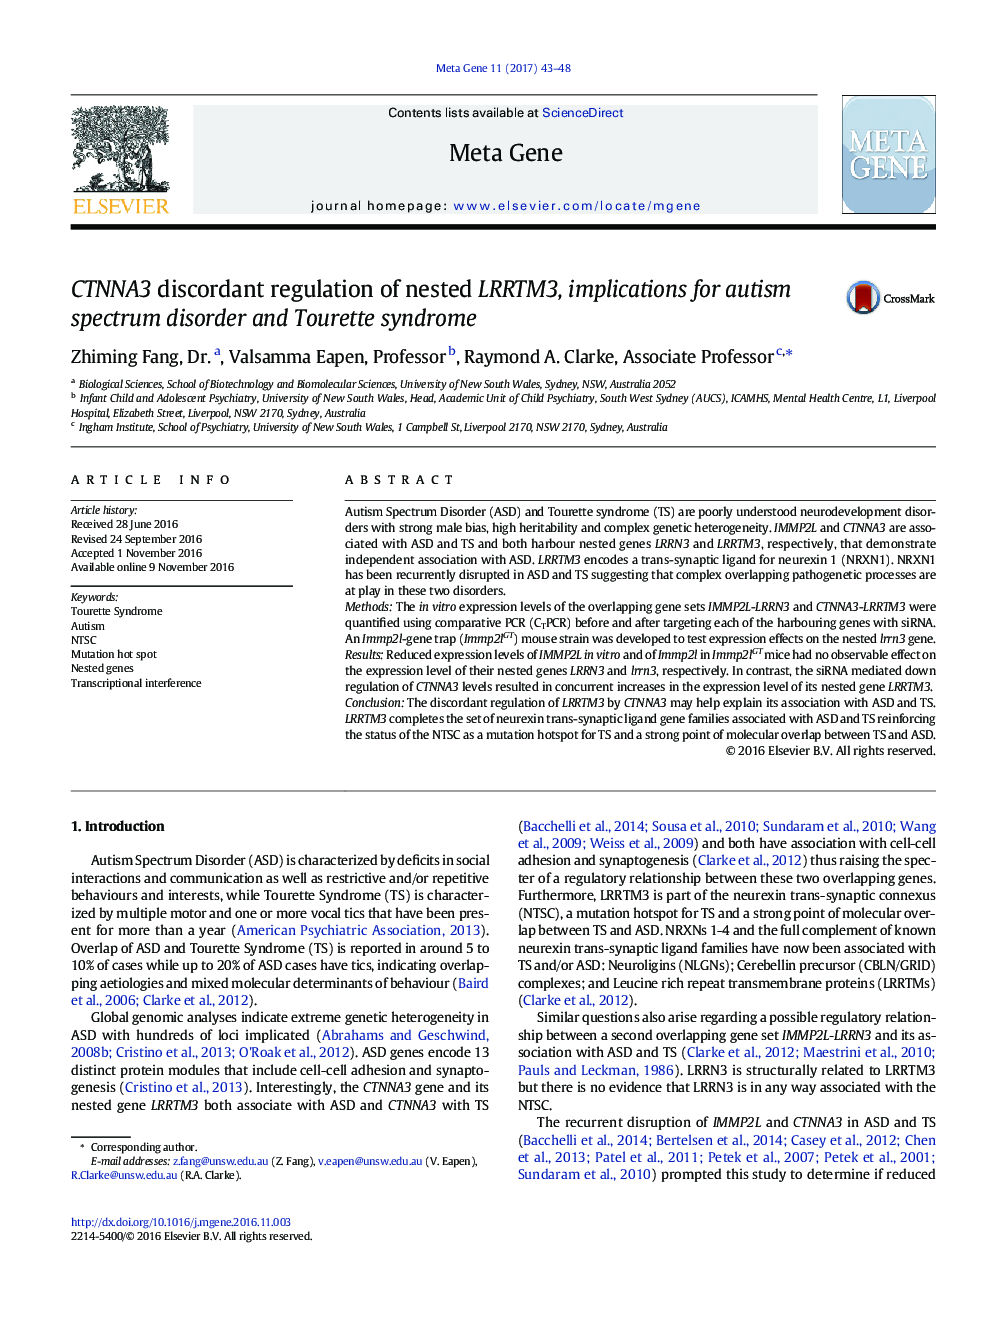 CTNNA3 discordant regulation of nested LRRTM3, implications for autism spectrum disorder and Tourette syndrome